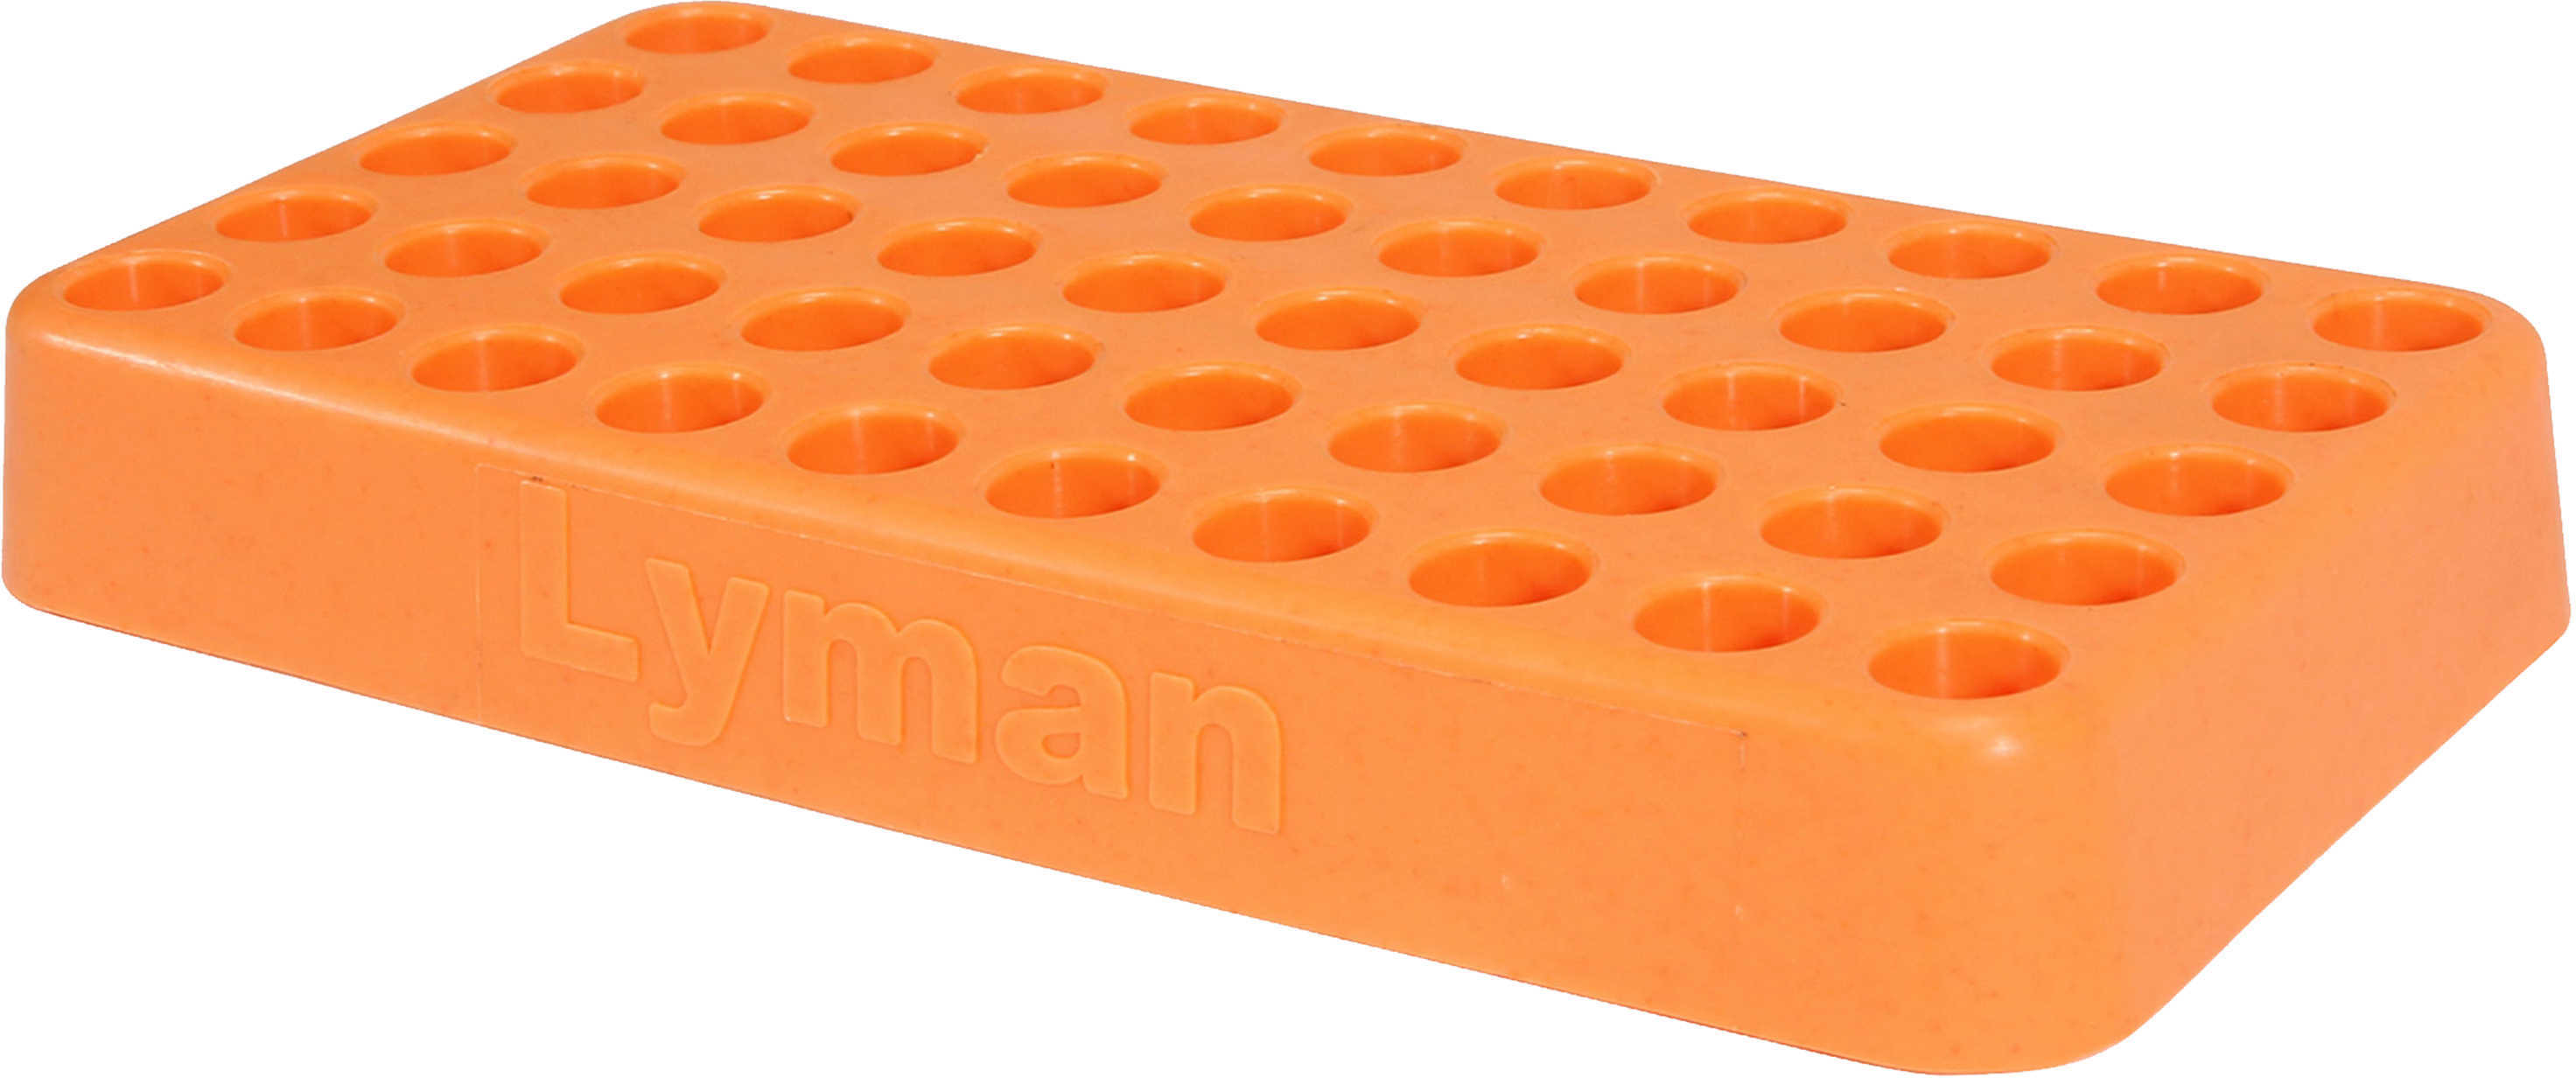 Lyman Custom Fit Loading Block .485 Hole Size Fits Select Calibers